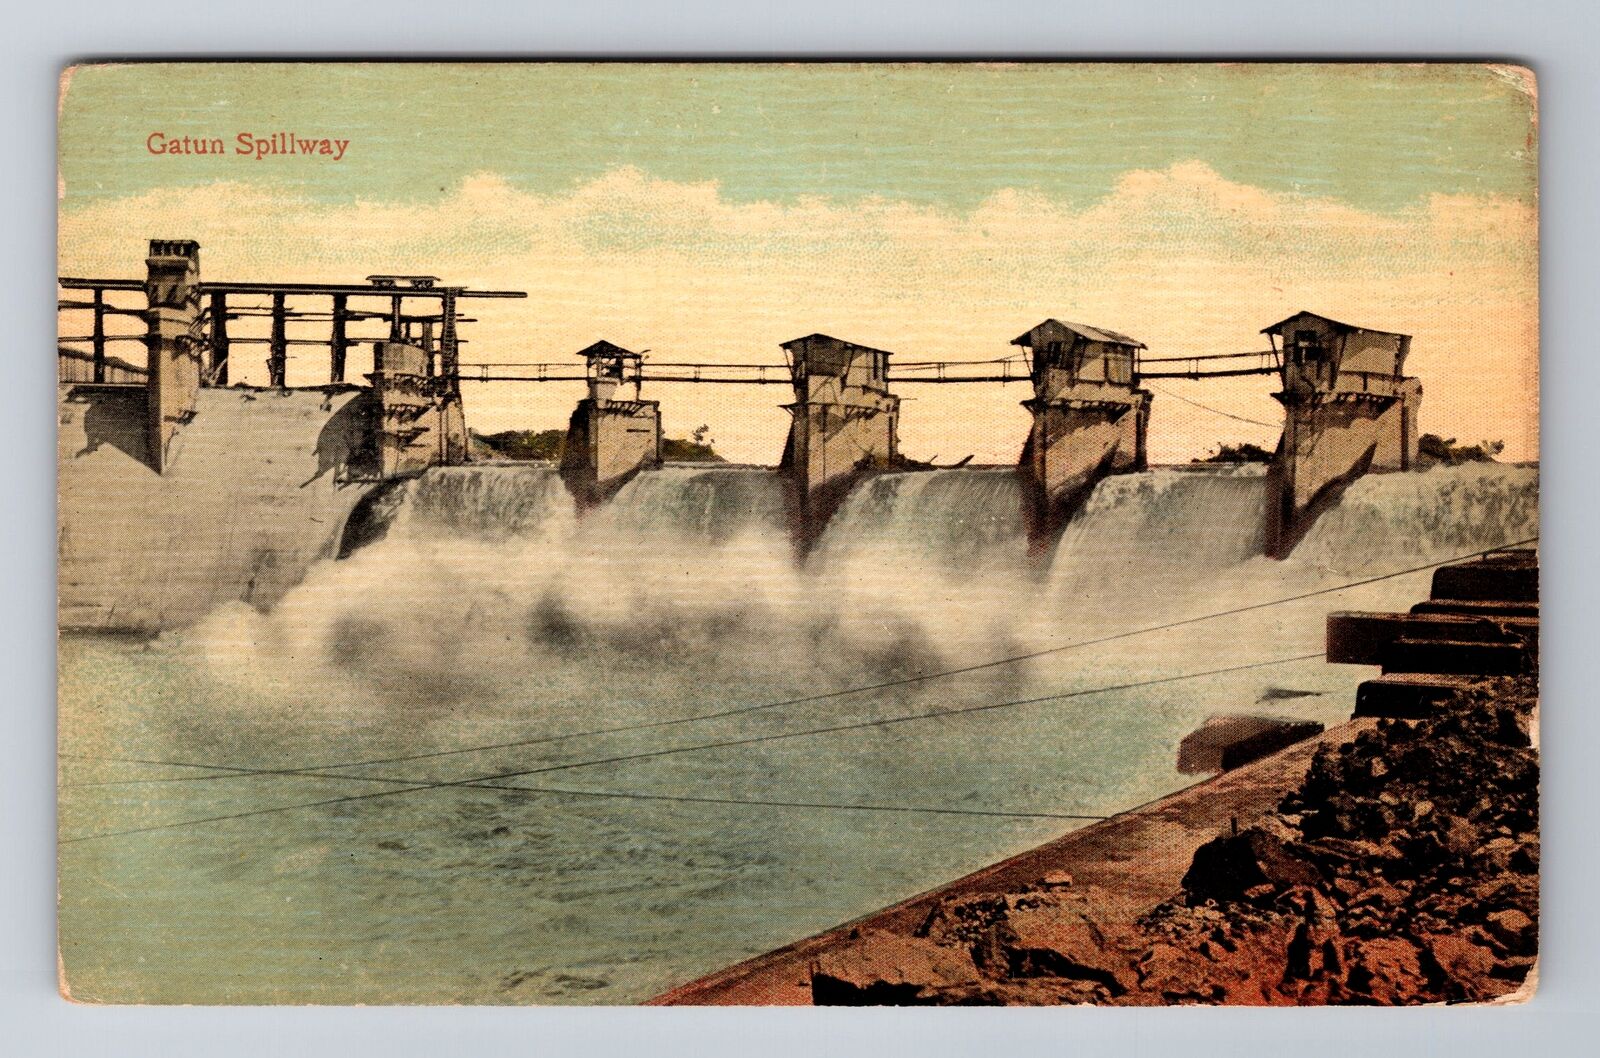 Panama, Gatun Spillway, Gatun Dam and Lake, Vintage Souvenir Postcard